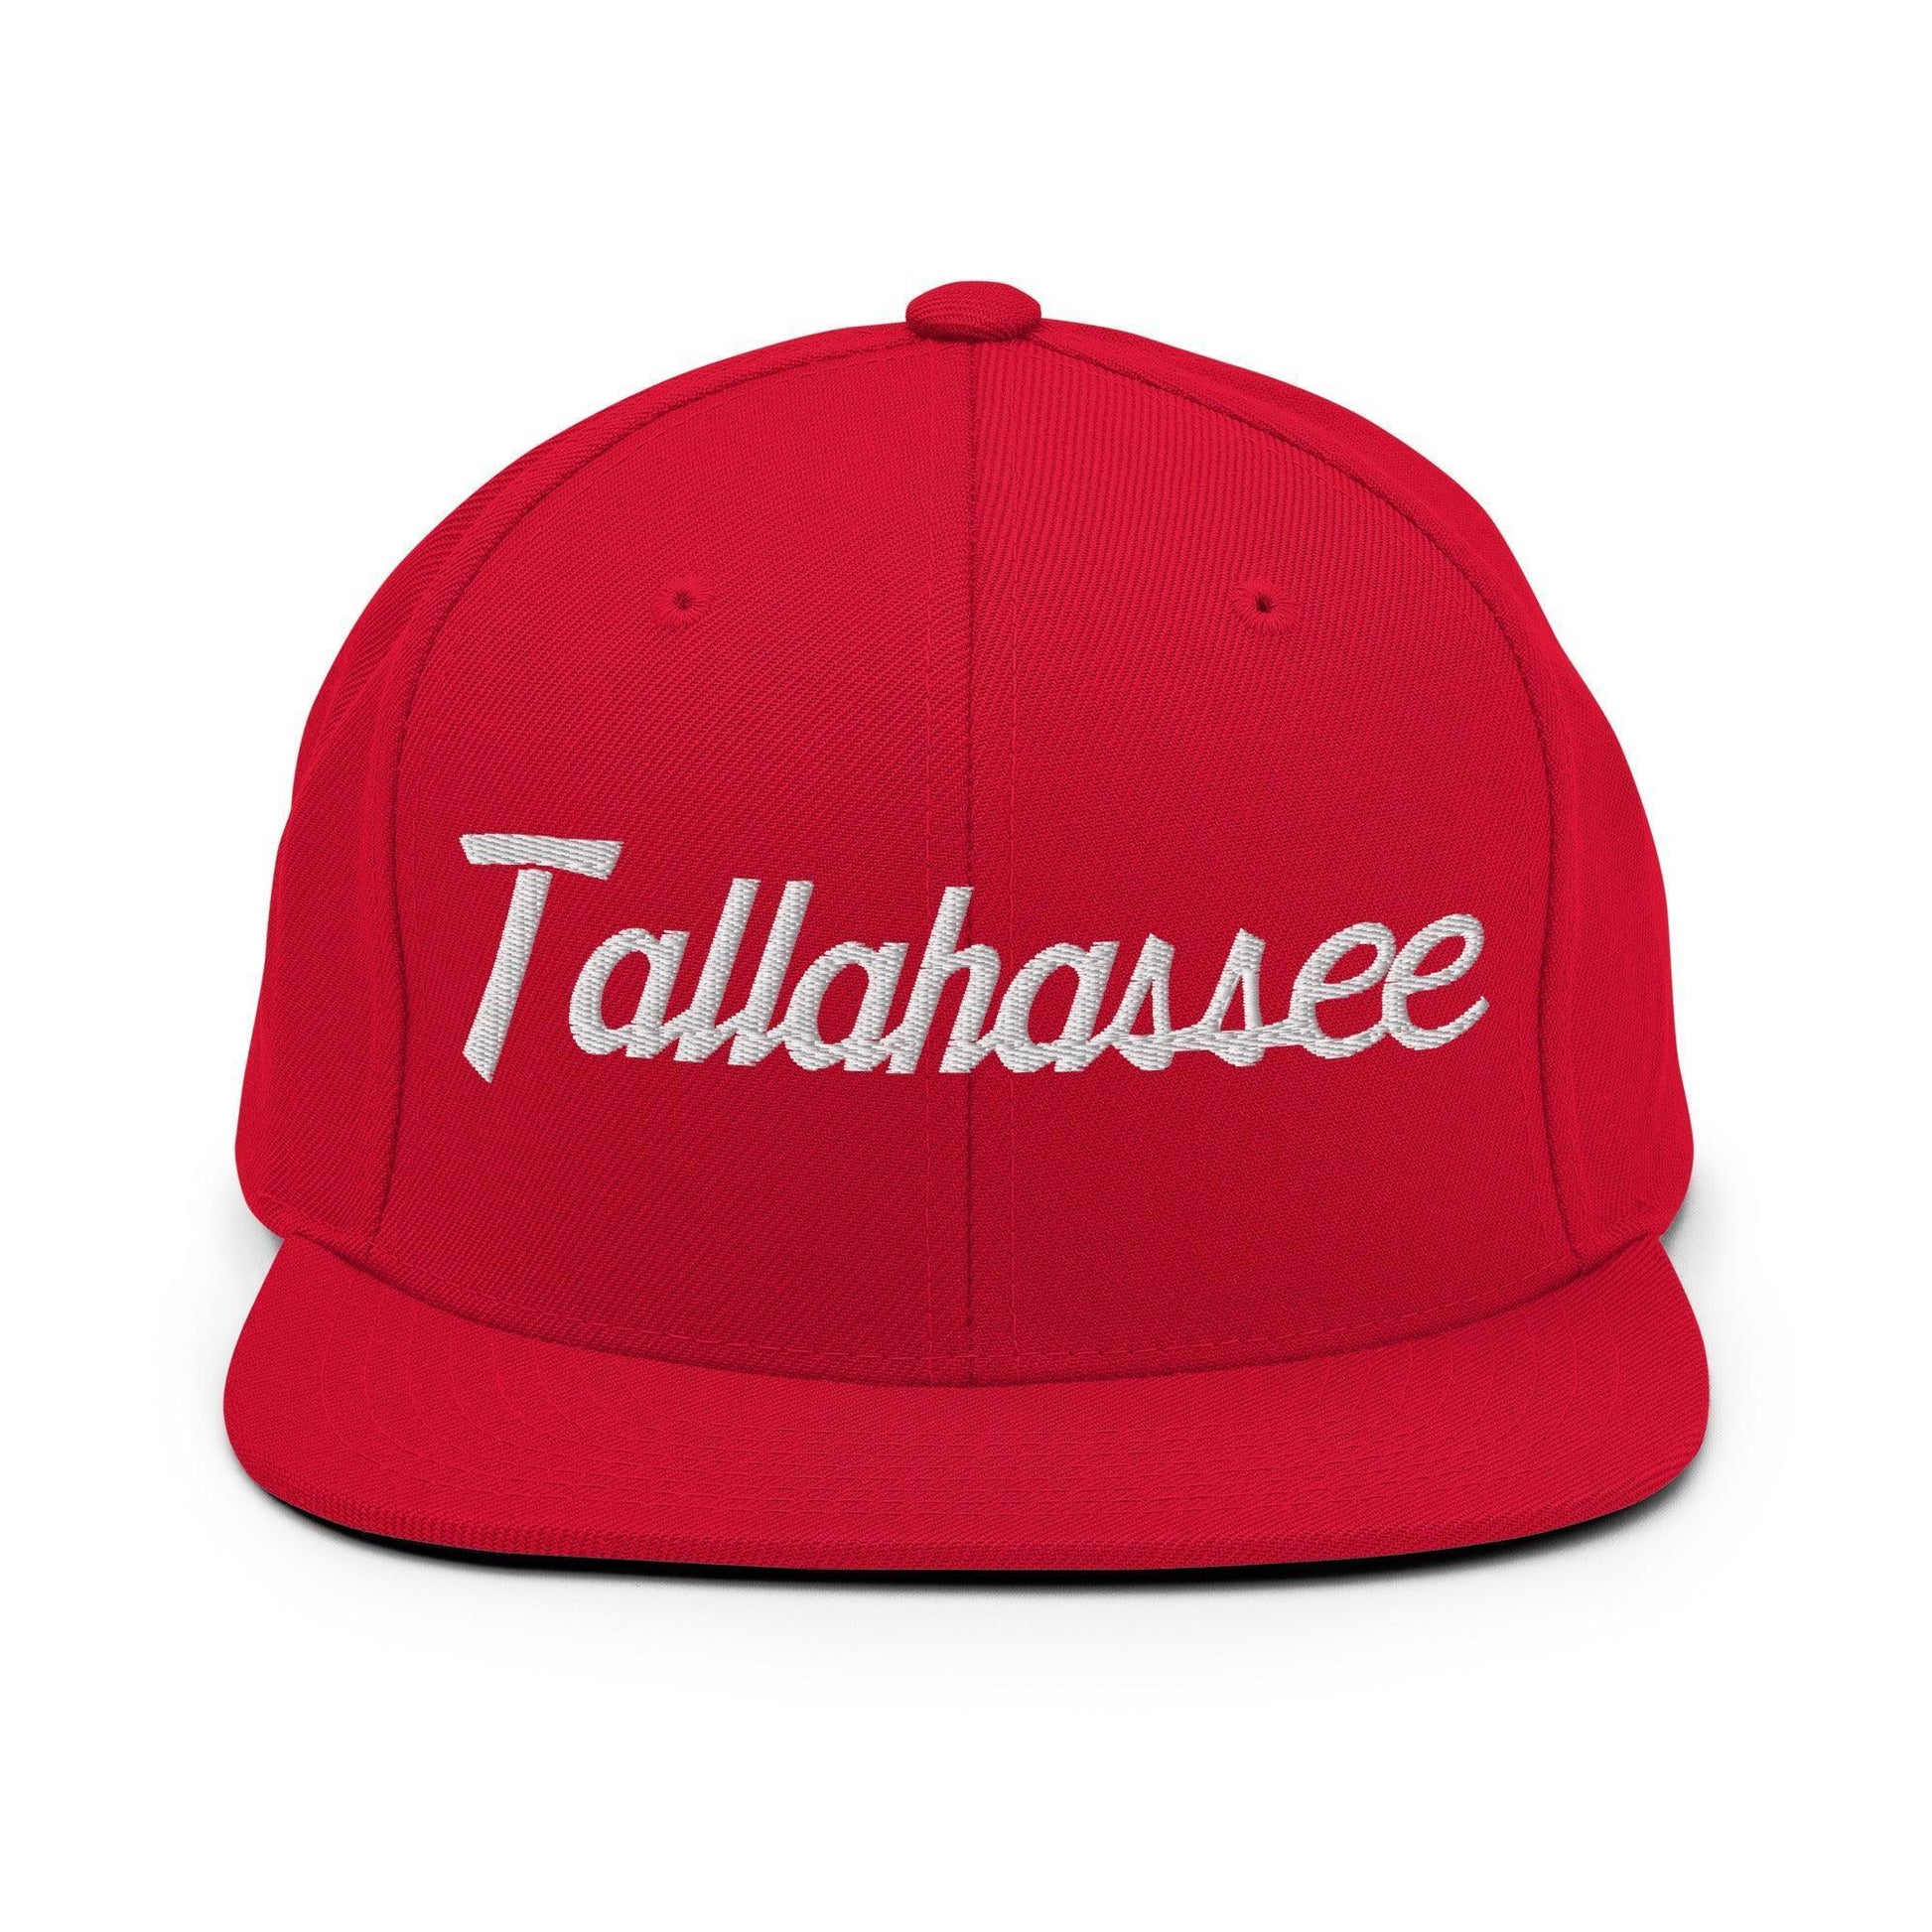 Tallahassee Script Snapback Hat Red